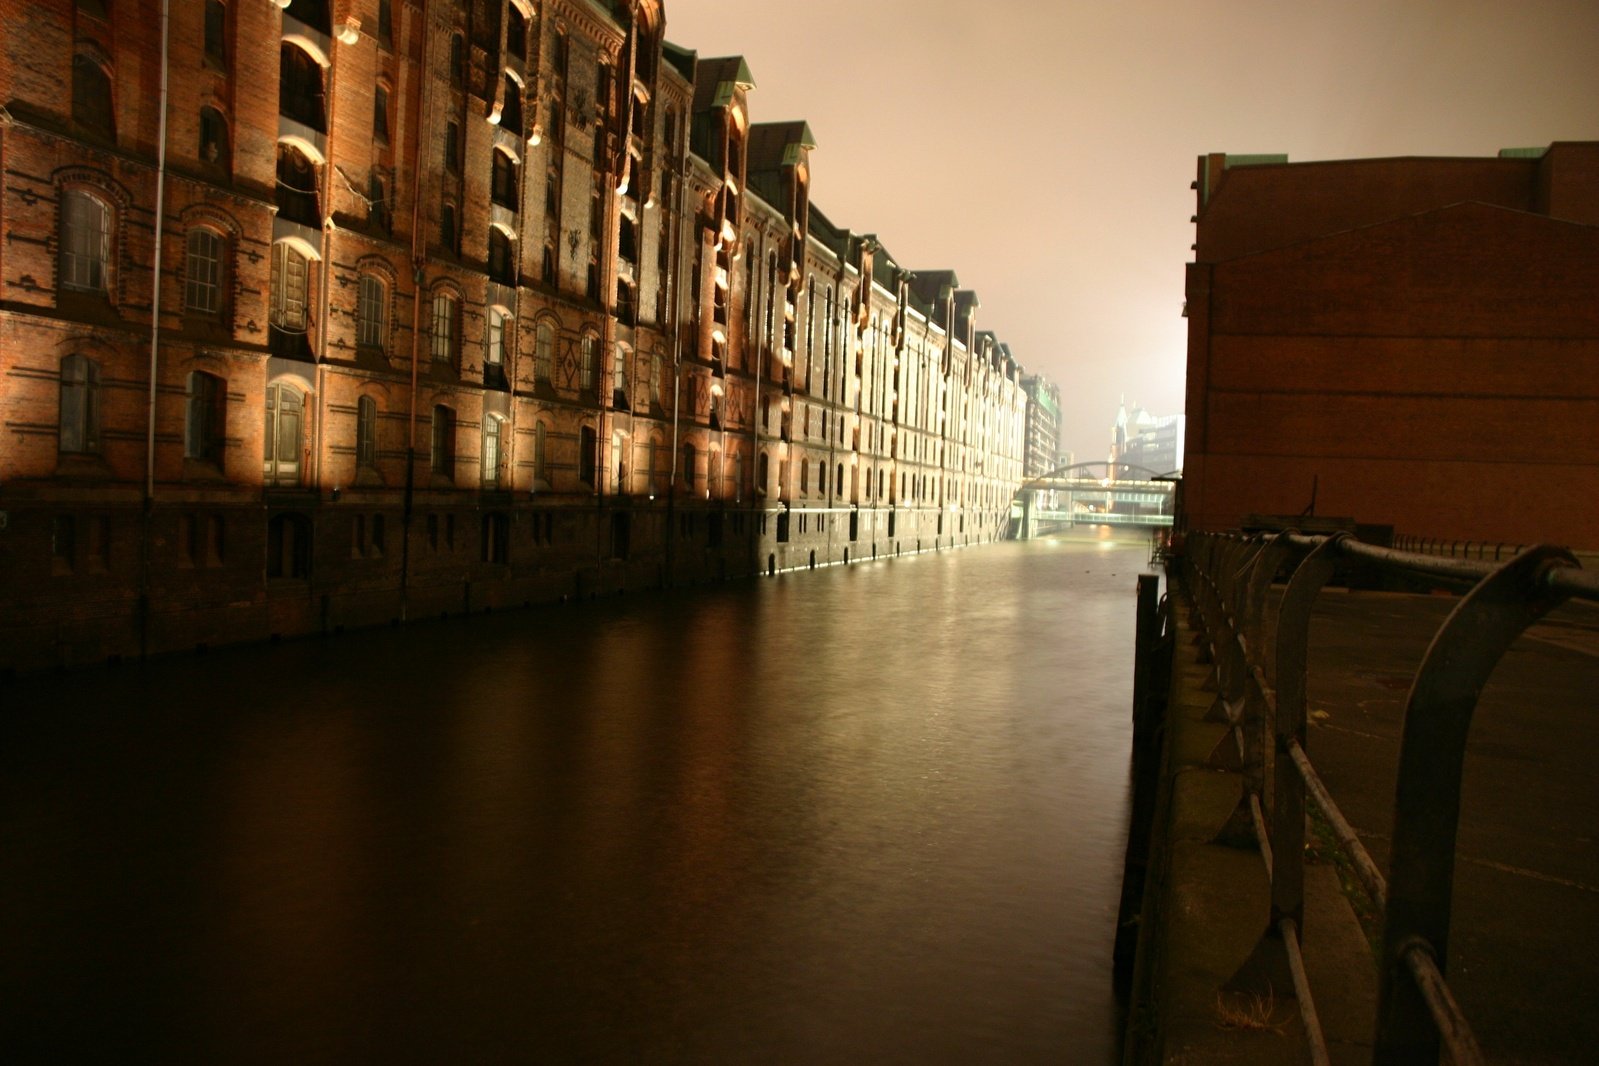 a long dark waterway running past a row of brick buildings